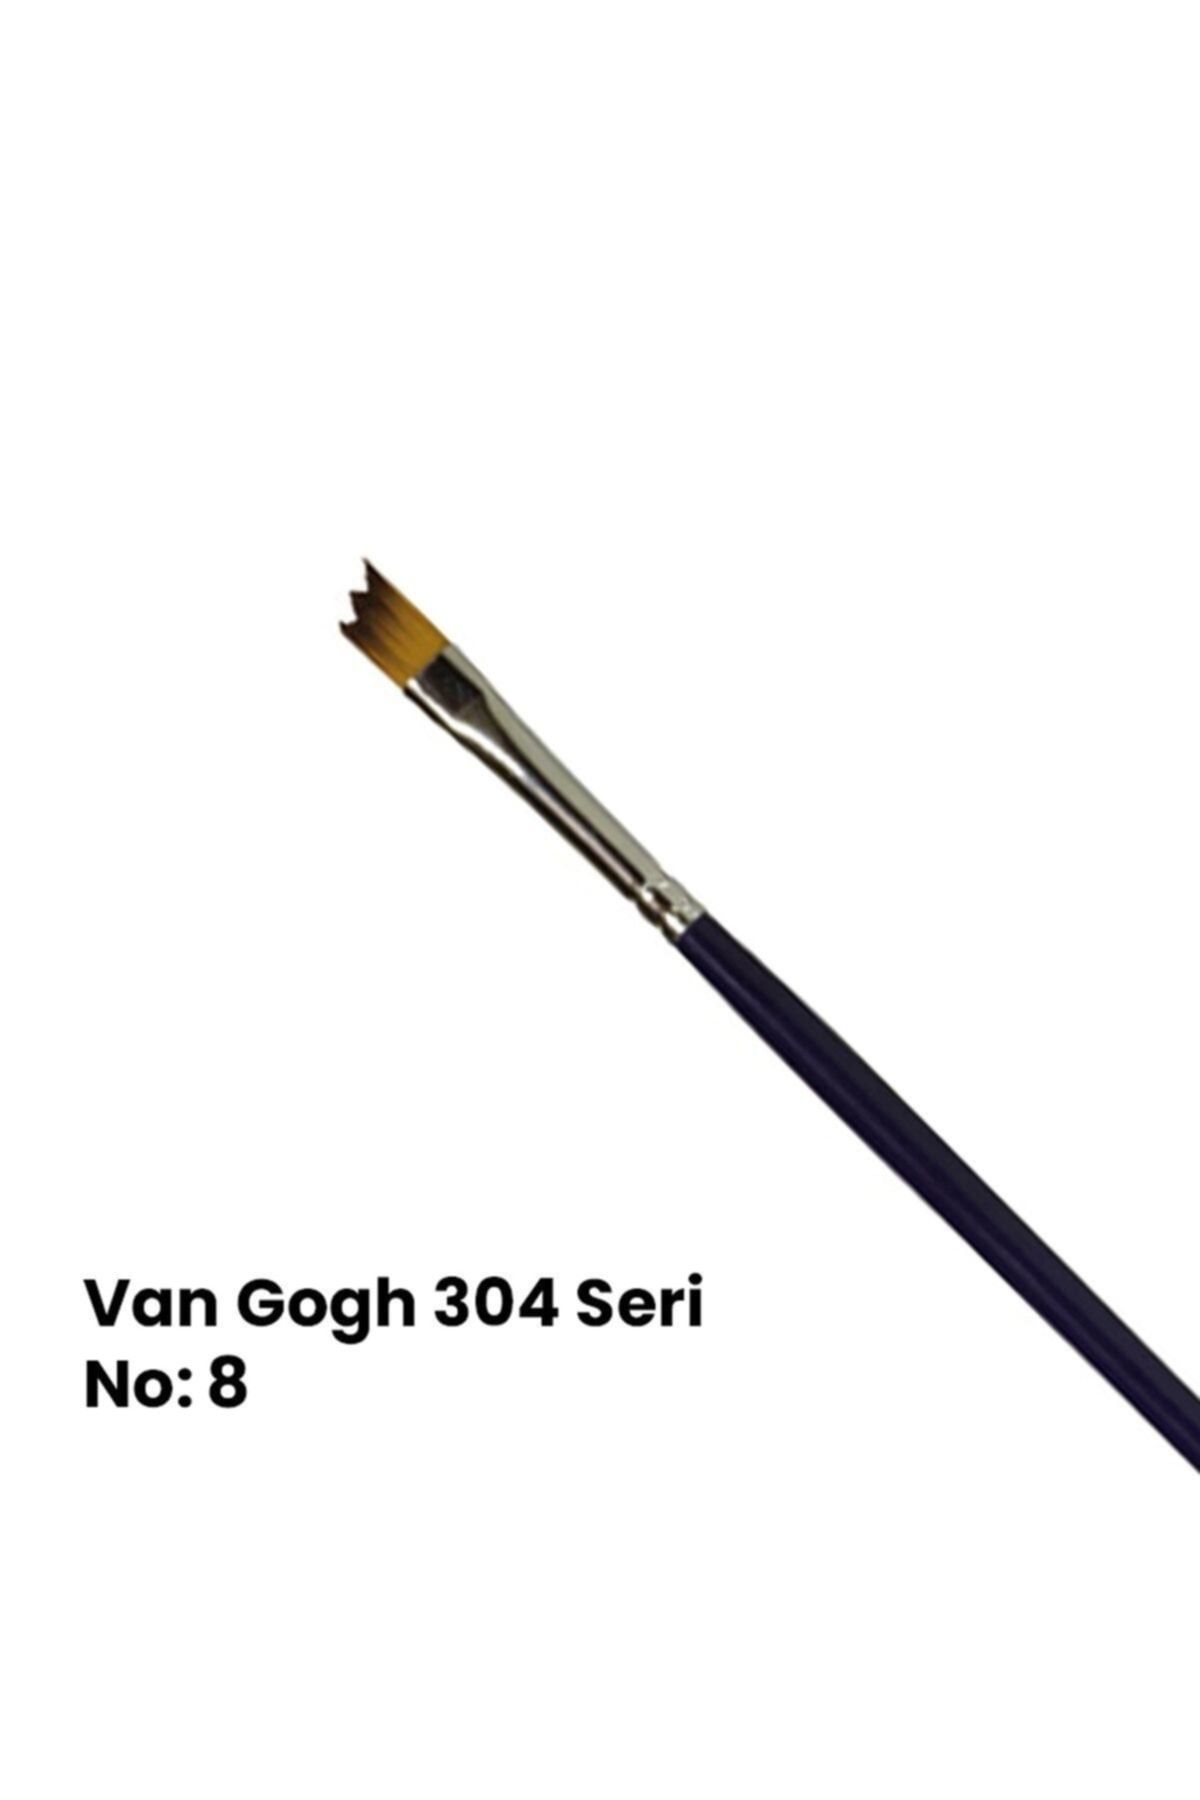 Van Gogh 304 Seri Sentetik Yan Kesik Tarak Fırça No 8